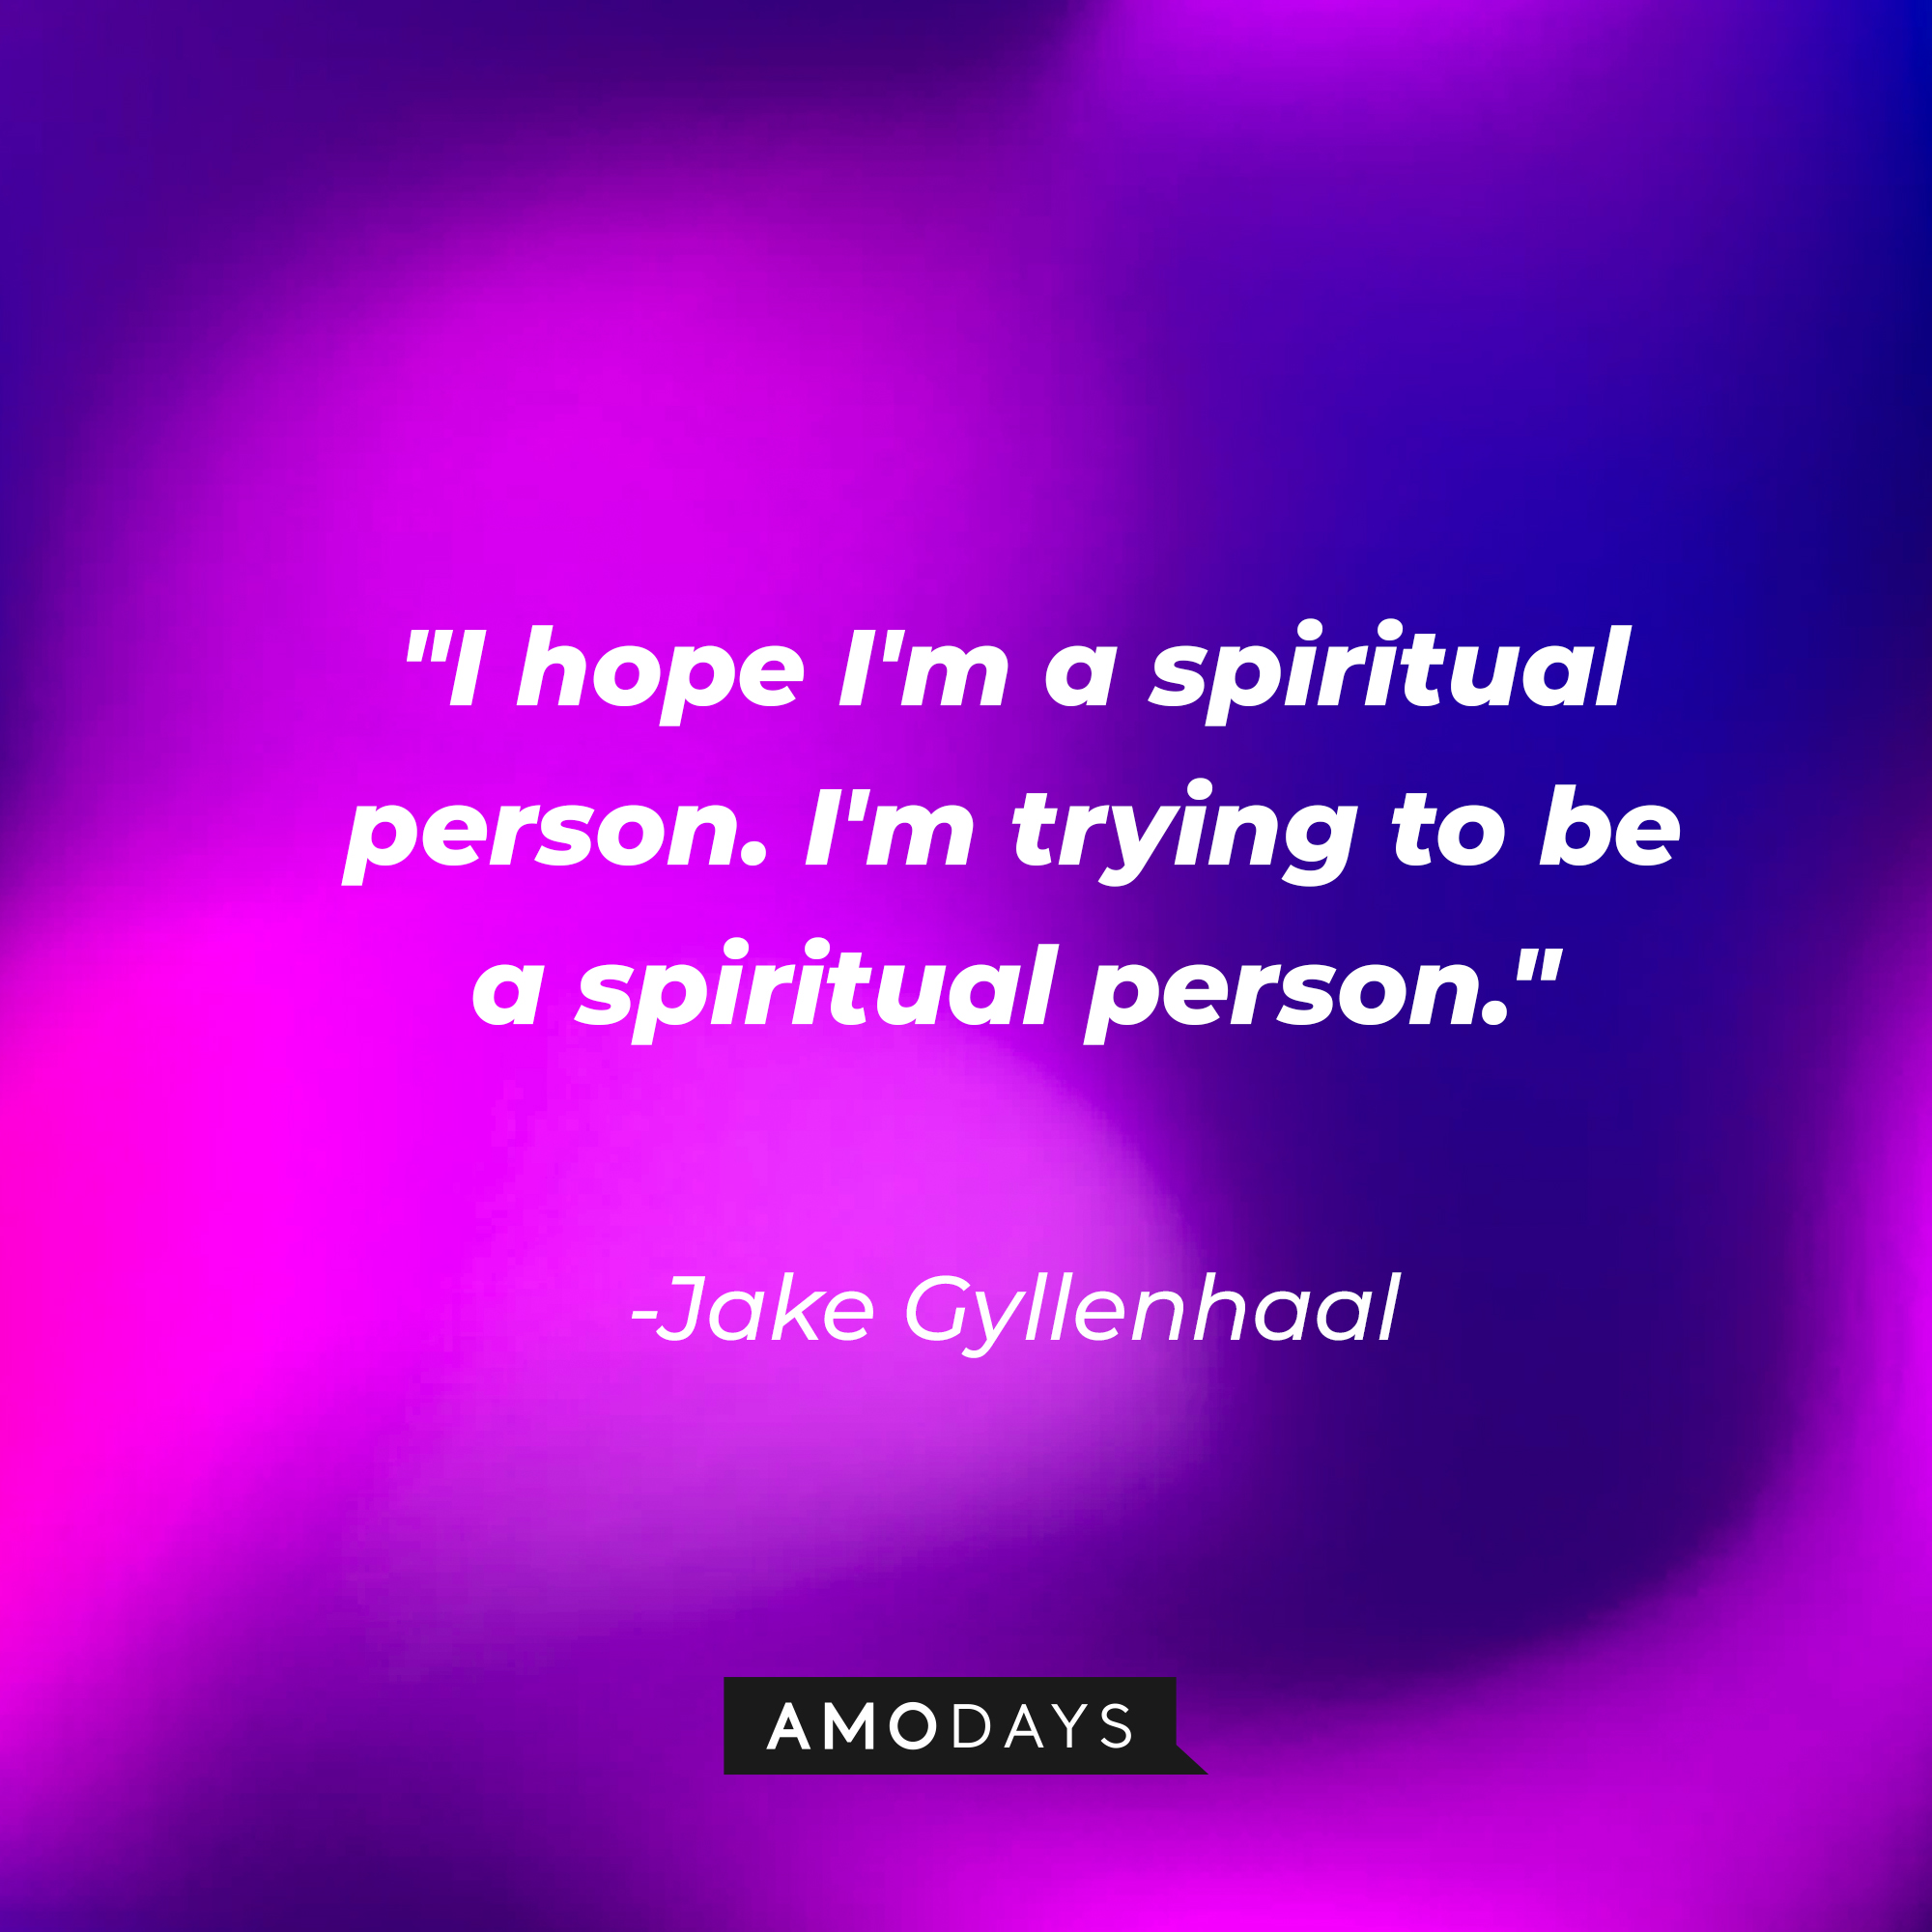 Jake Gyllenhaal's quote: "I hope I'm a spiritual person. I'm trying to be a spiritual person." | Source: AmoDays